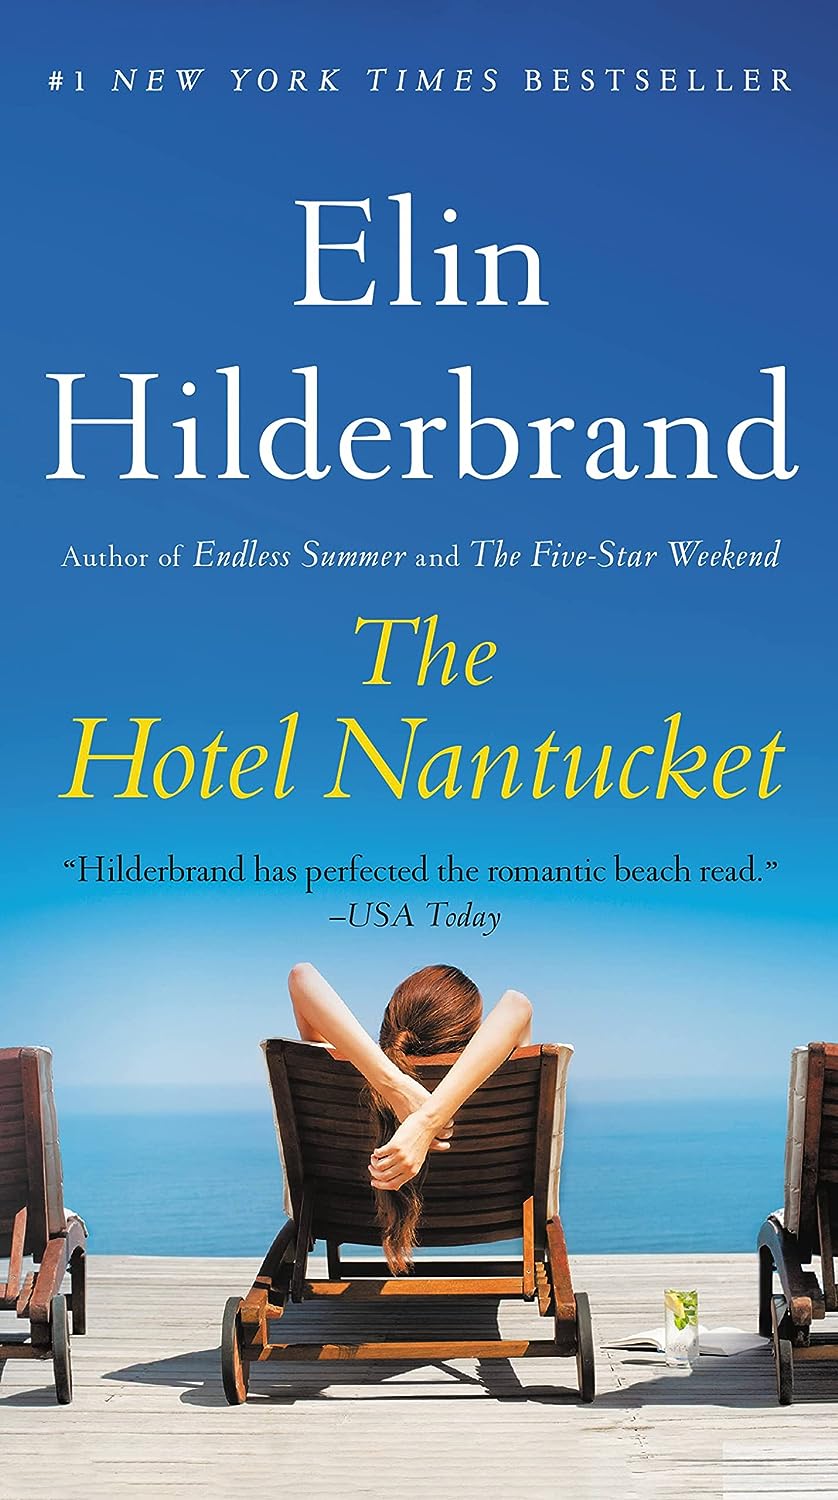 The hotel nantucket by elin hilderbrand